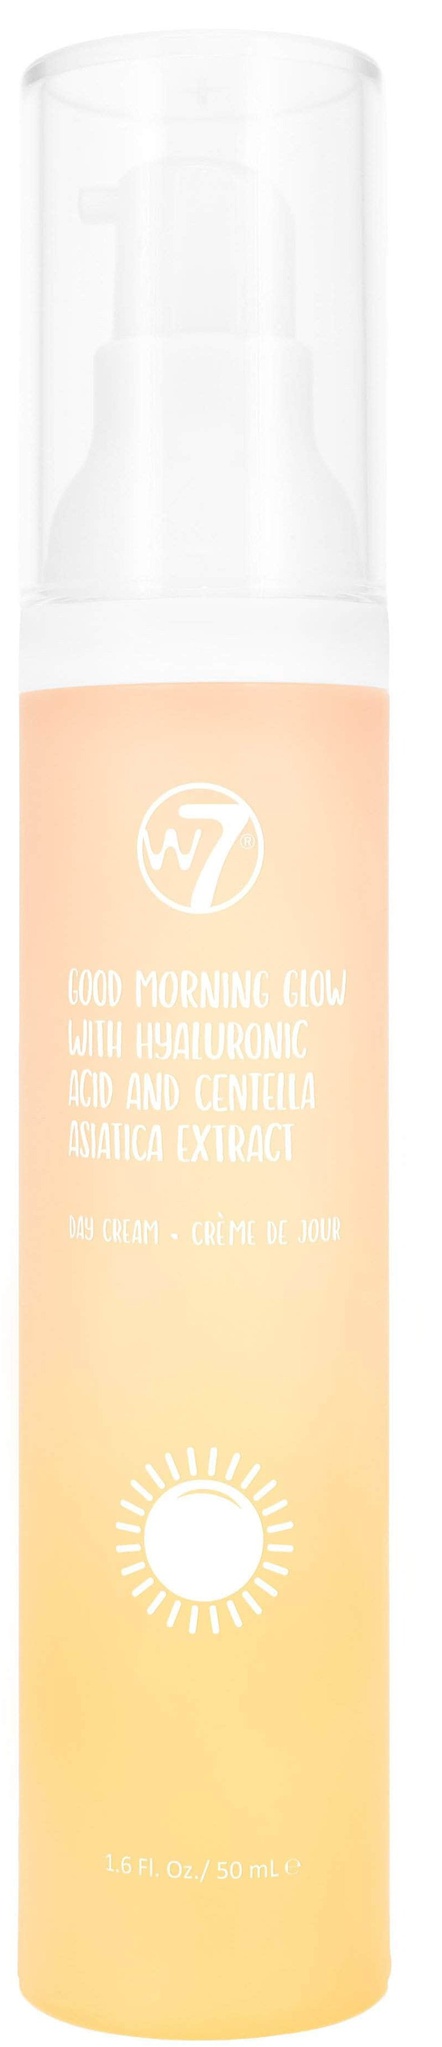 W7 Good Morning Glow Day Cream